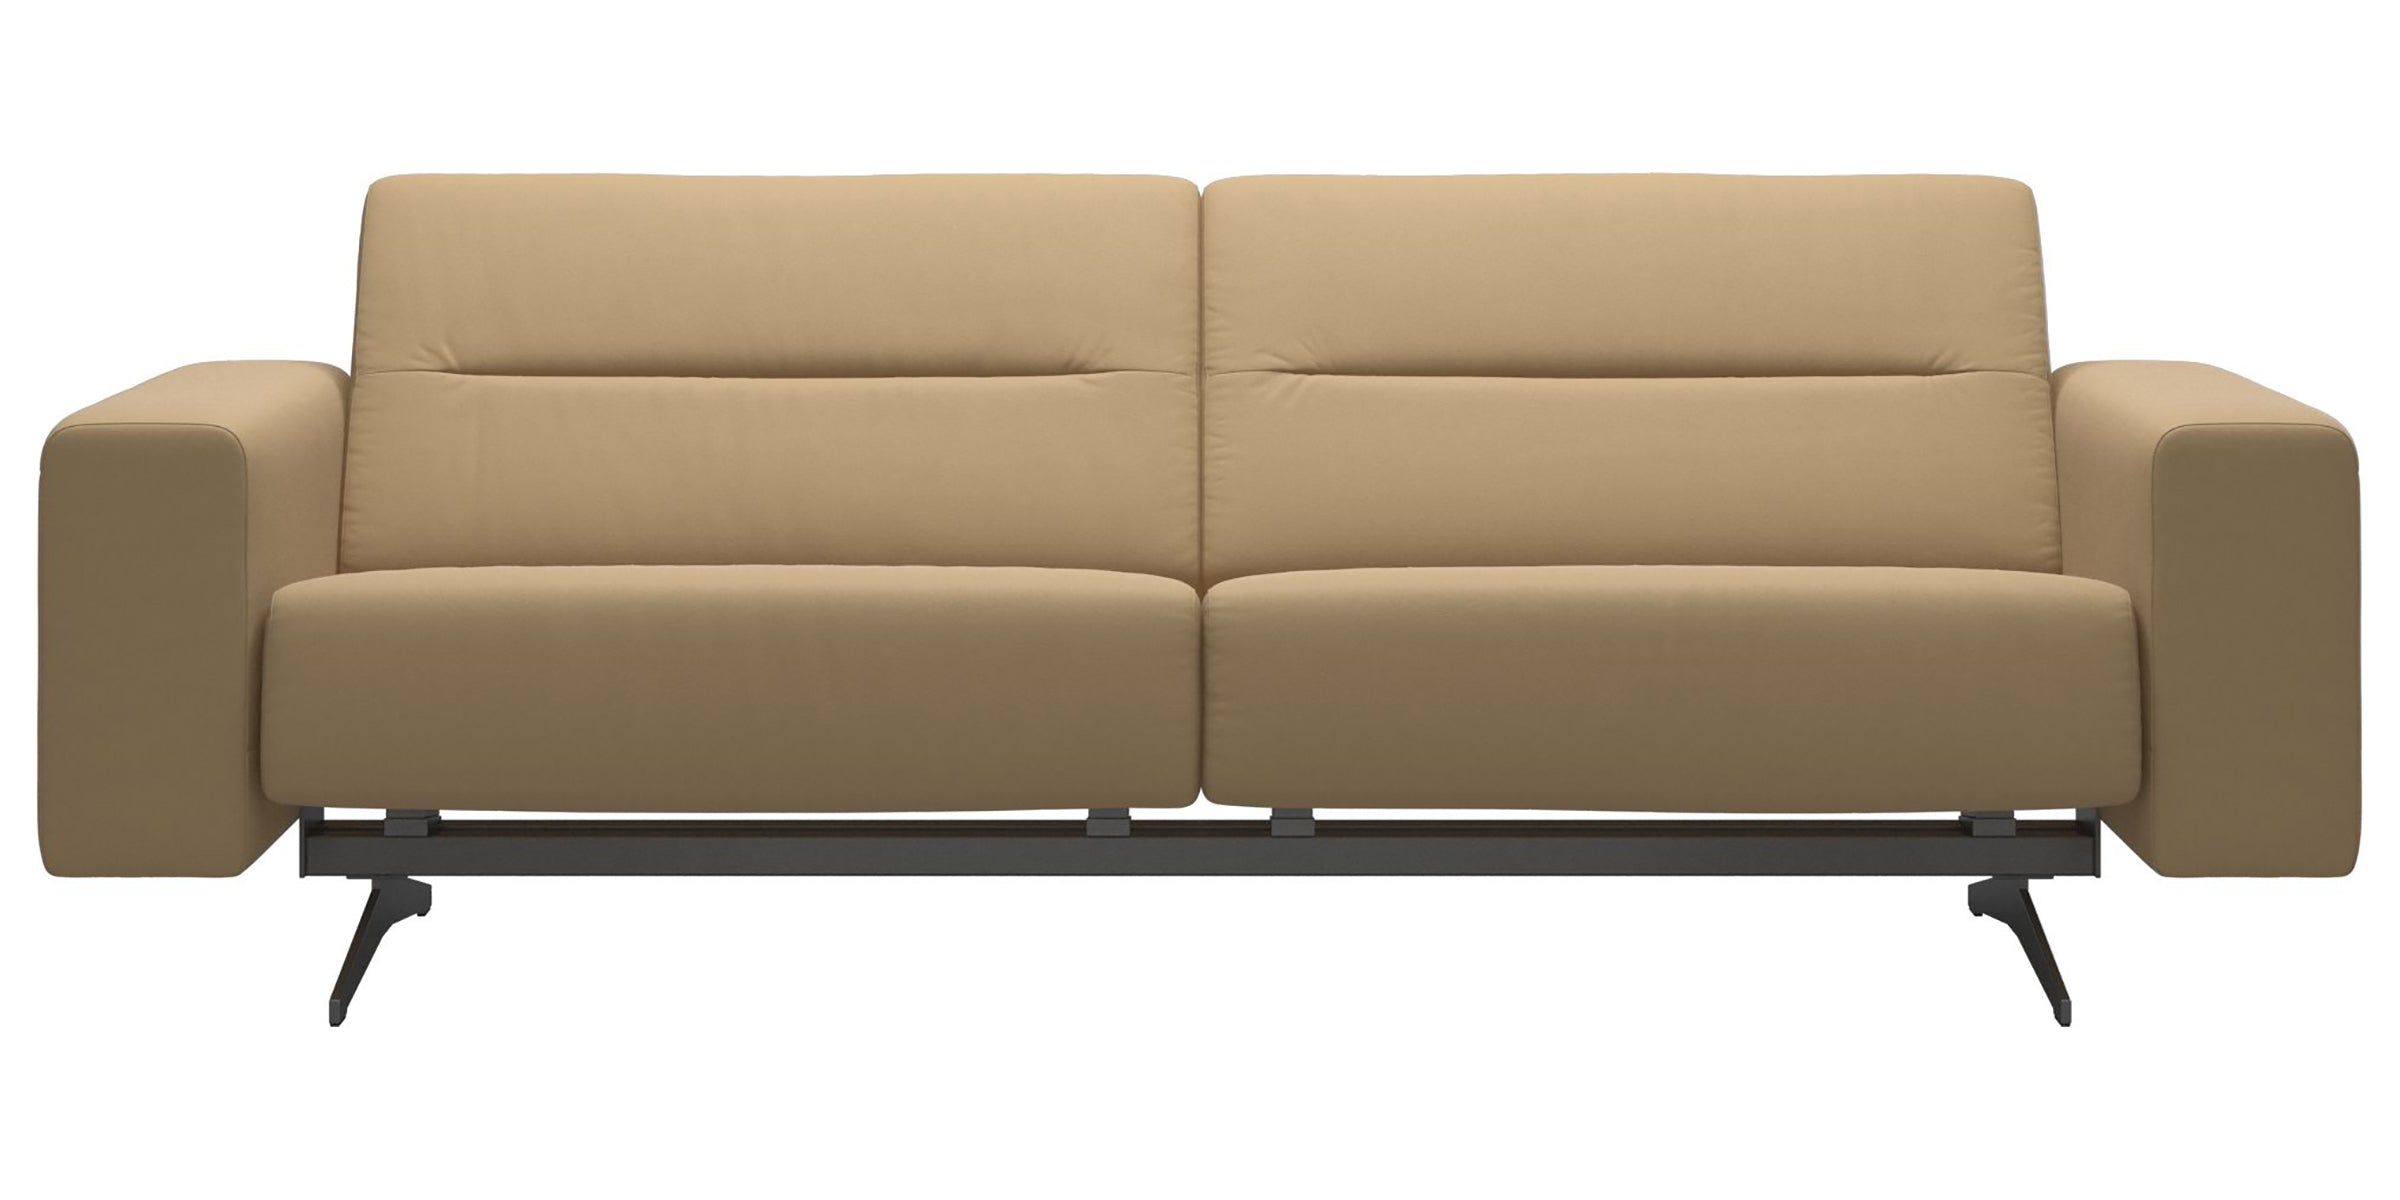 Paloma Leather Sand & Chrome Base | Stressless Stella 2.5-Seater Sofa with S1 Arm | Valley Ridge Furniture